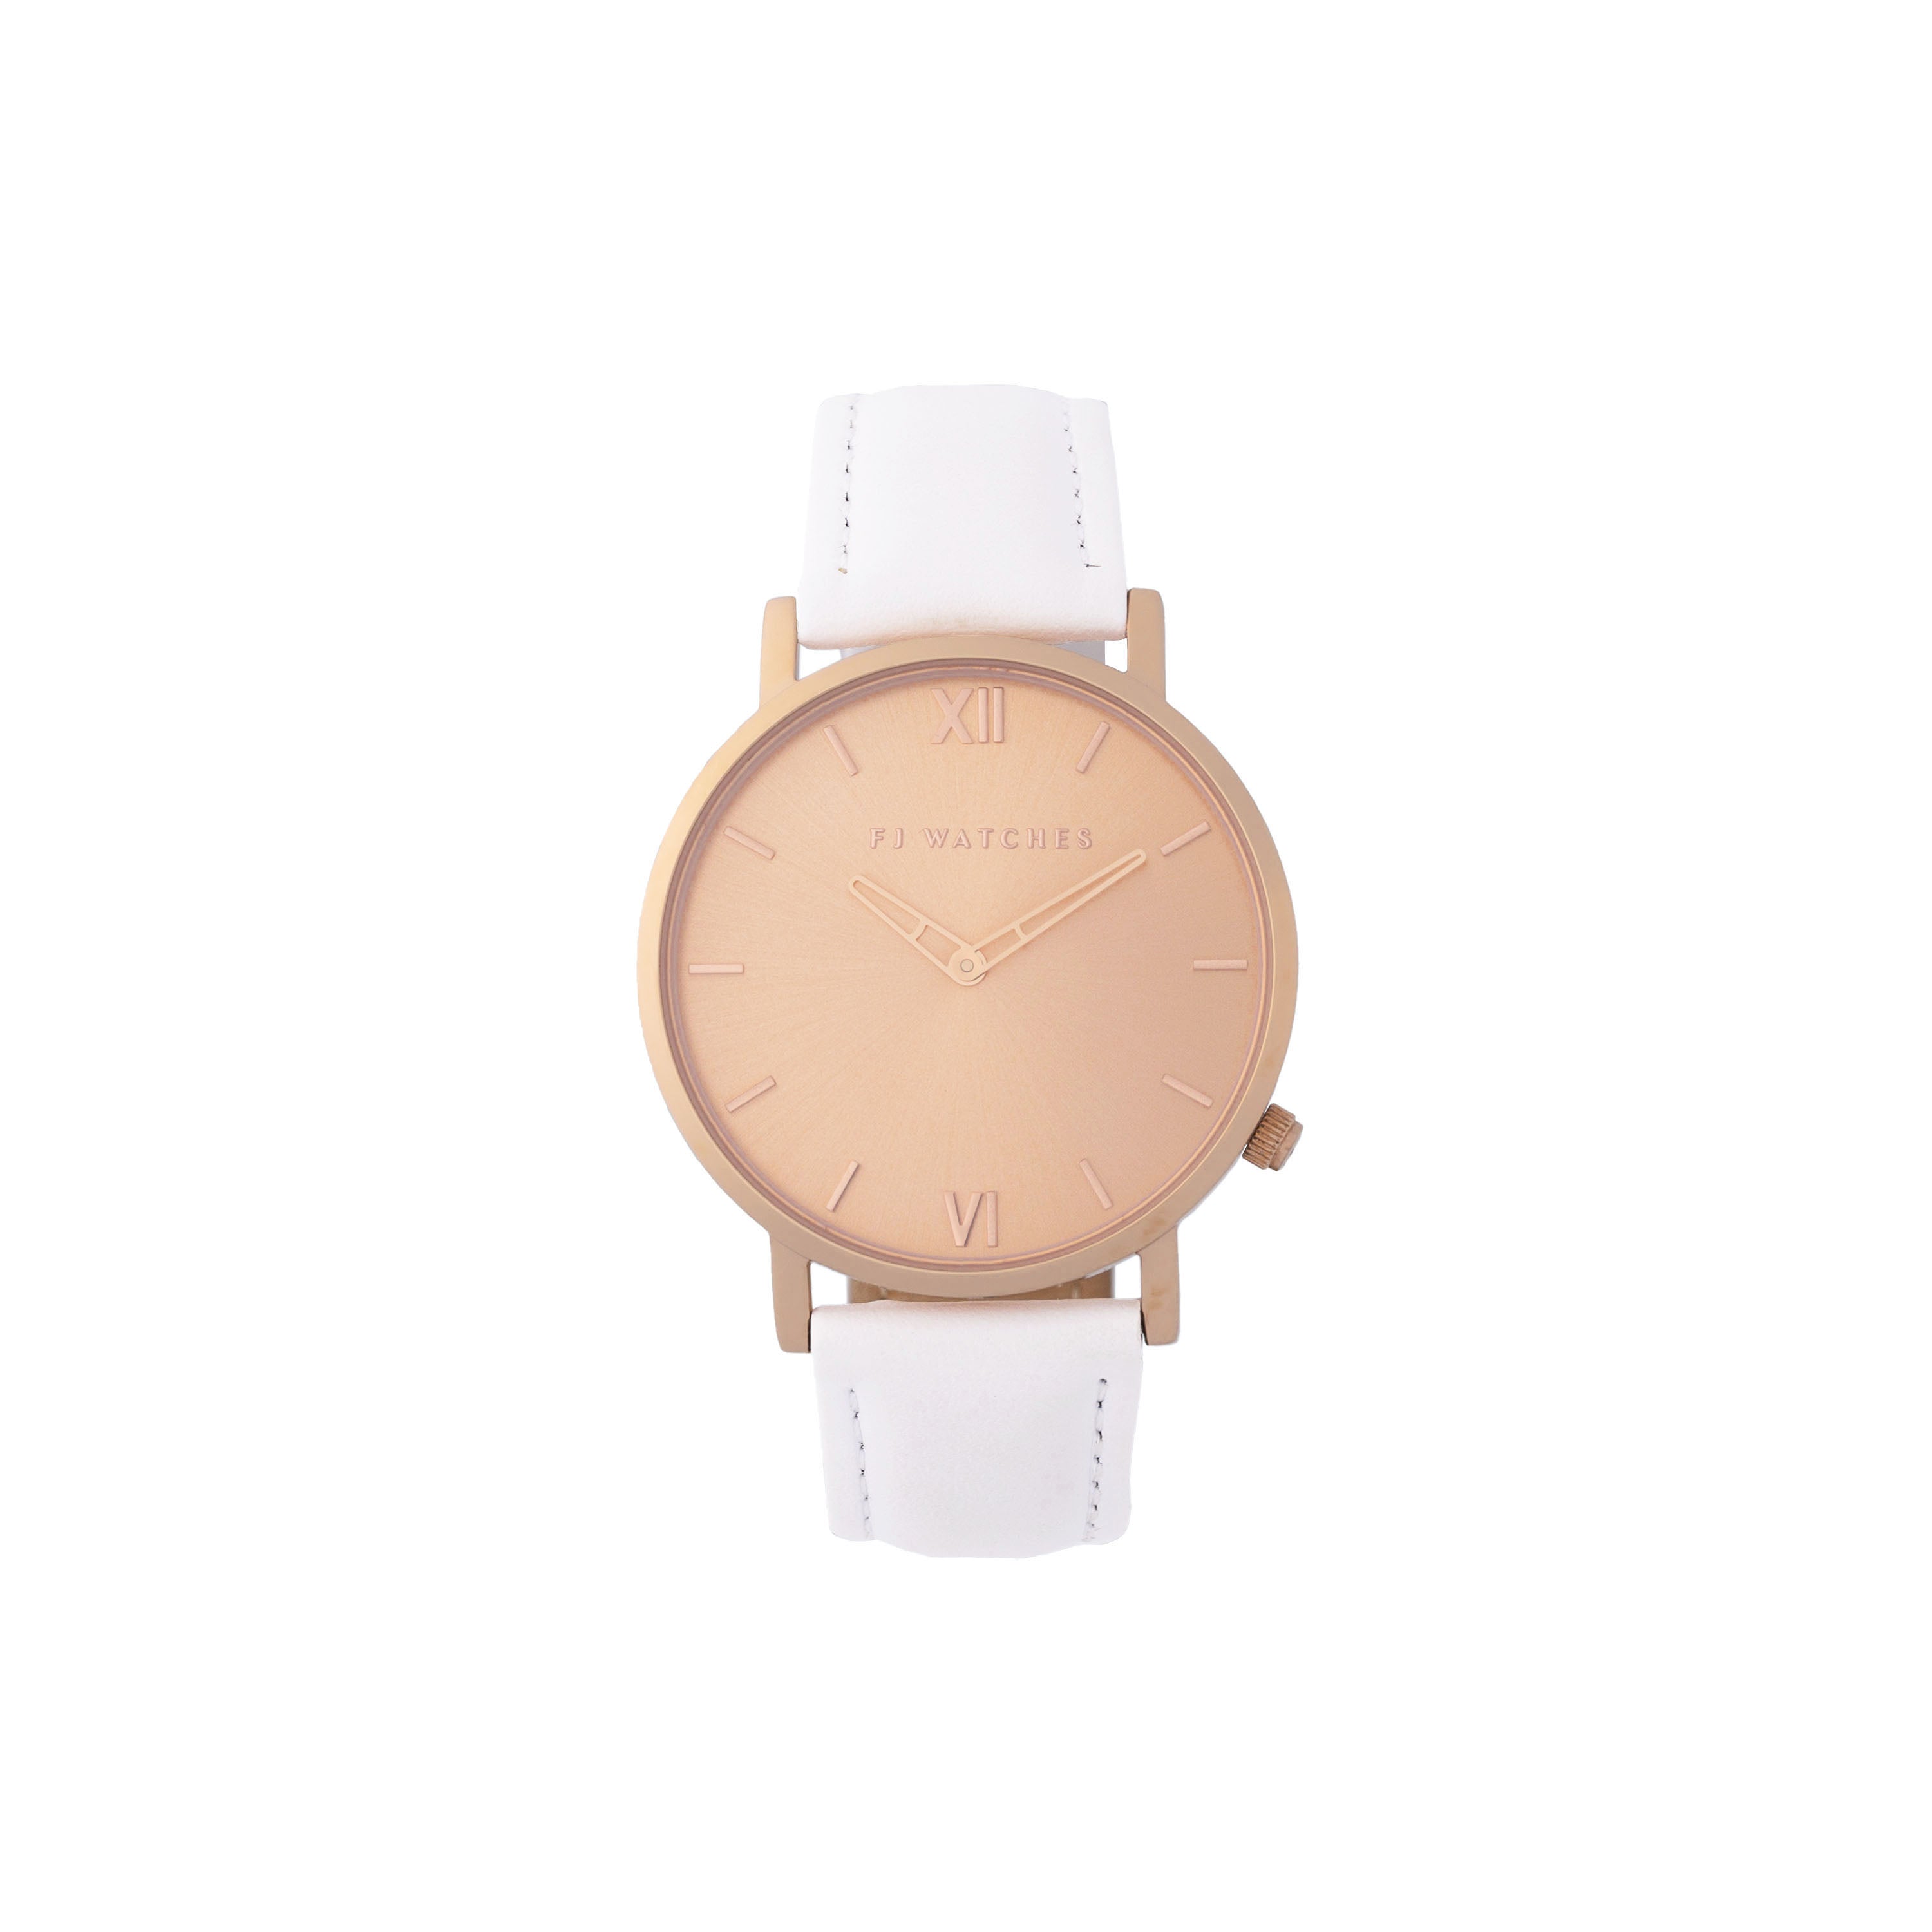 FJ Watches sunset rose gold rosegold watch women 36mm white leather minimalist